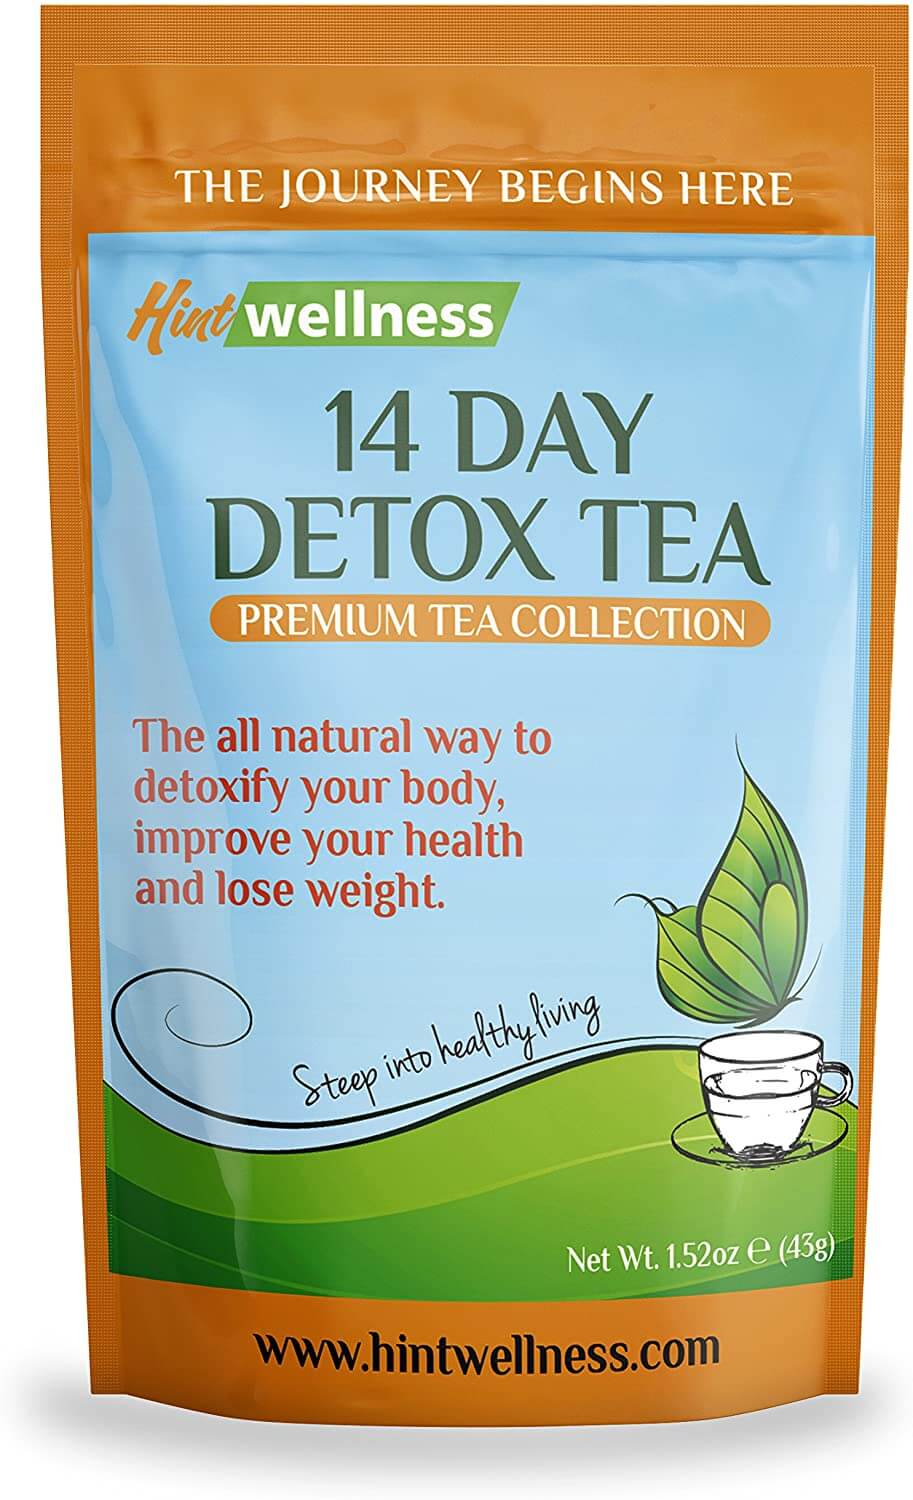 Hint Wellness 14 Day Detox Tea